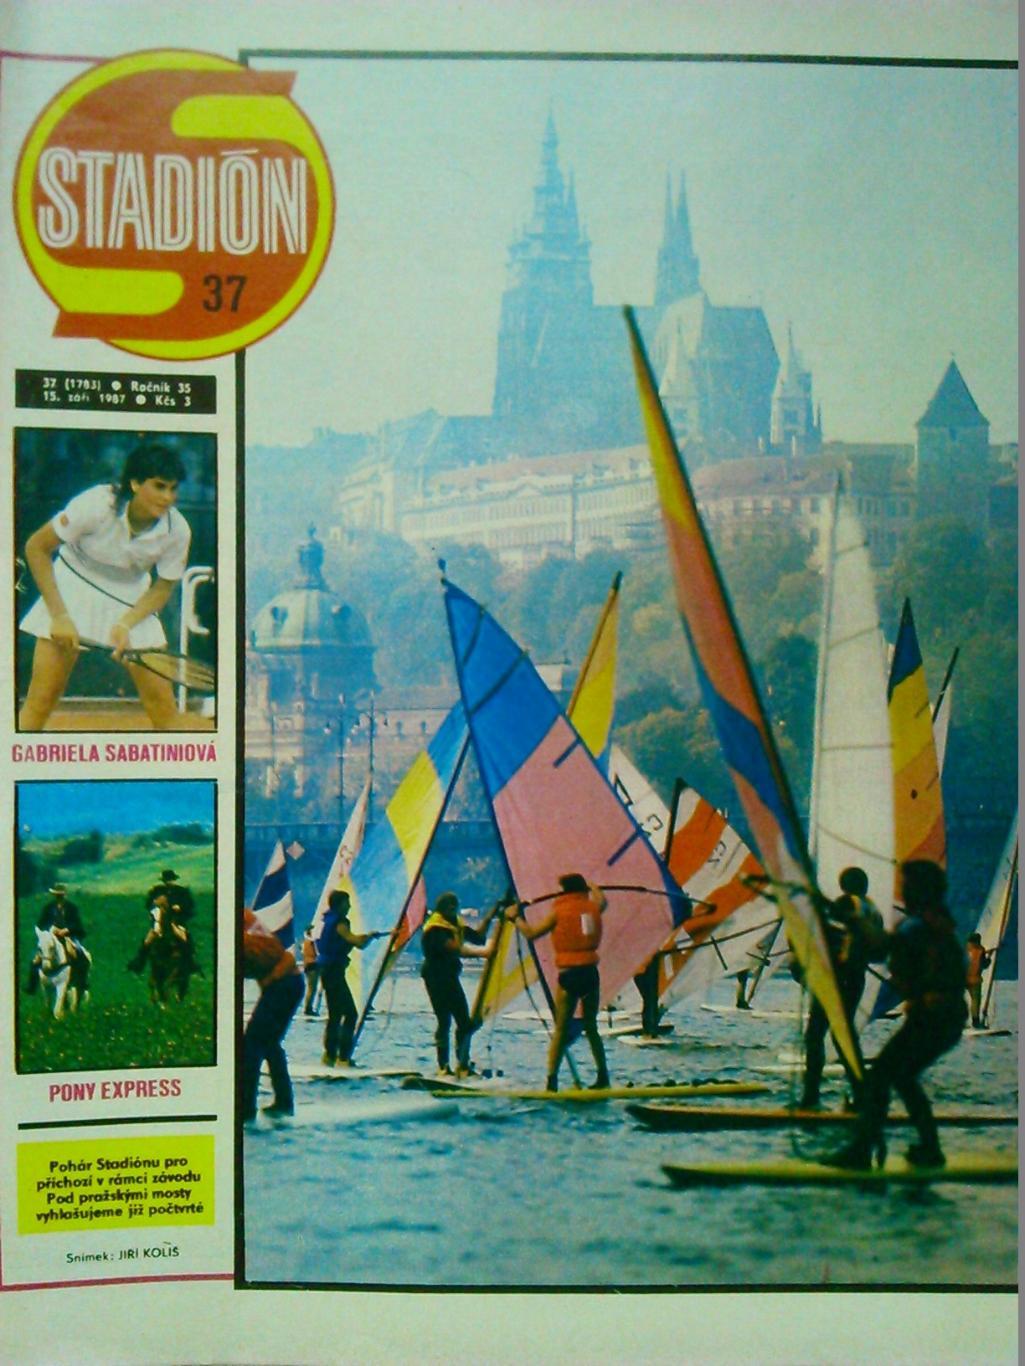 Stadion (Стадион).№ 37 1987 (Чех.) Футбол. Хоккей. Бакетбол. Оптом cкидки 50%